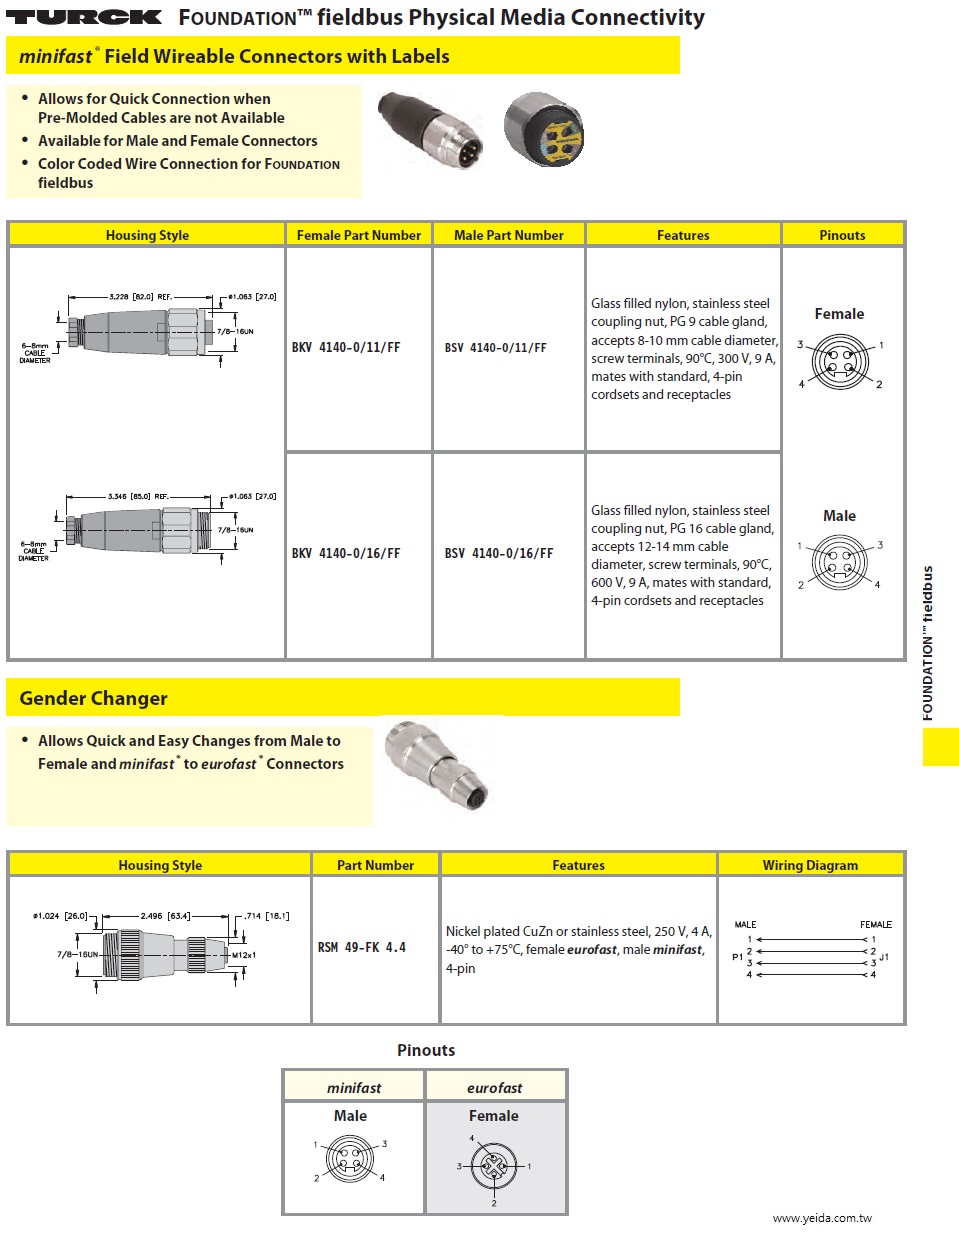 Turck-BSV FOUNDATION™ fieldbus minifast® Field Wireable Connectors with Labels 工業自動化監控制帶標籤的現場可接線連接器產品圖